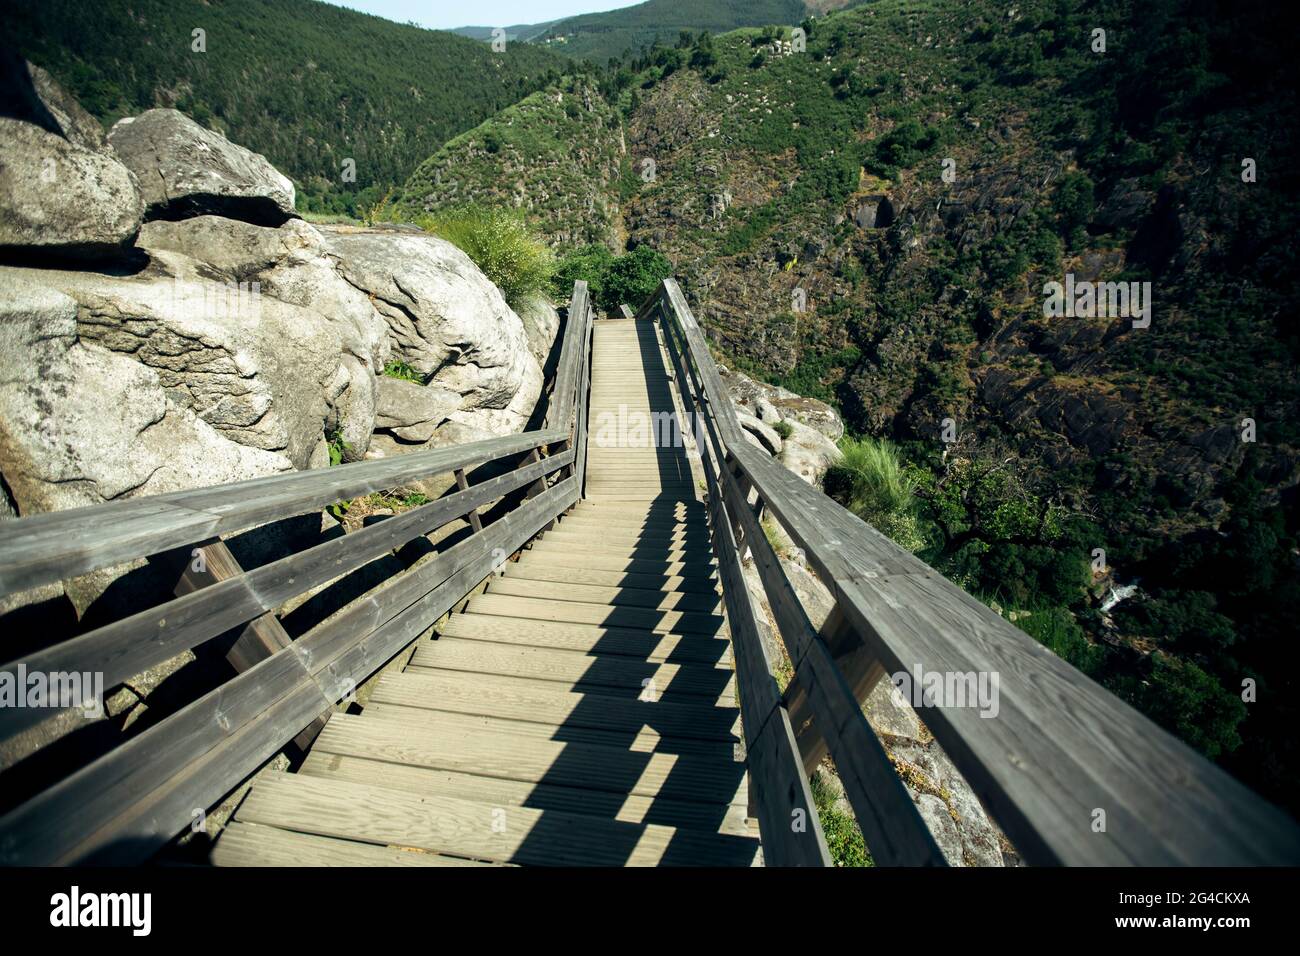 Start of the Paiva walkways along the River Paiva, Arouca, Aveiro, Portugal. Stock Photo